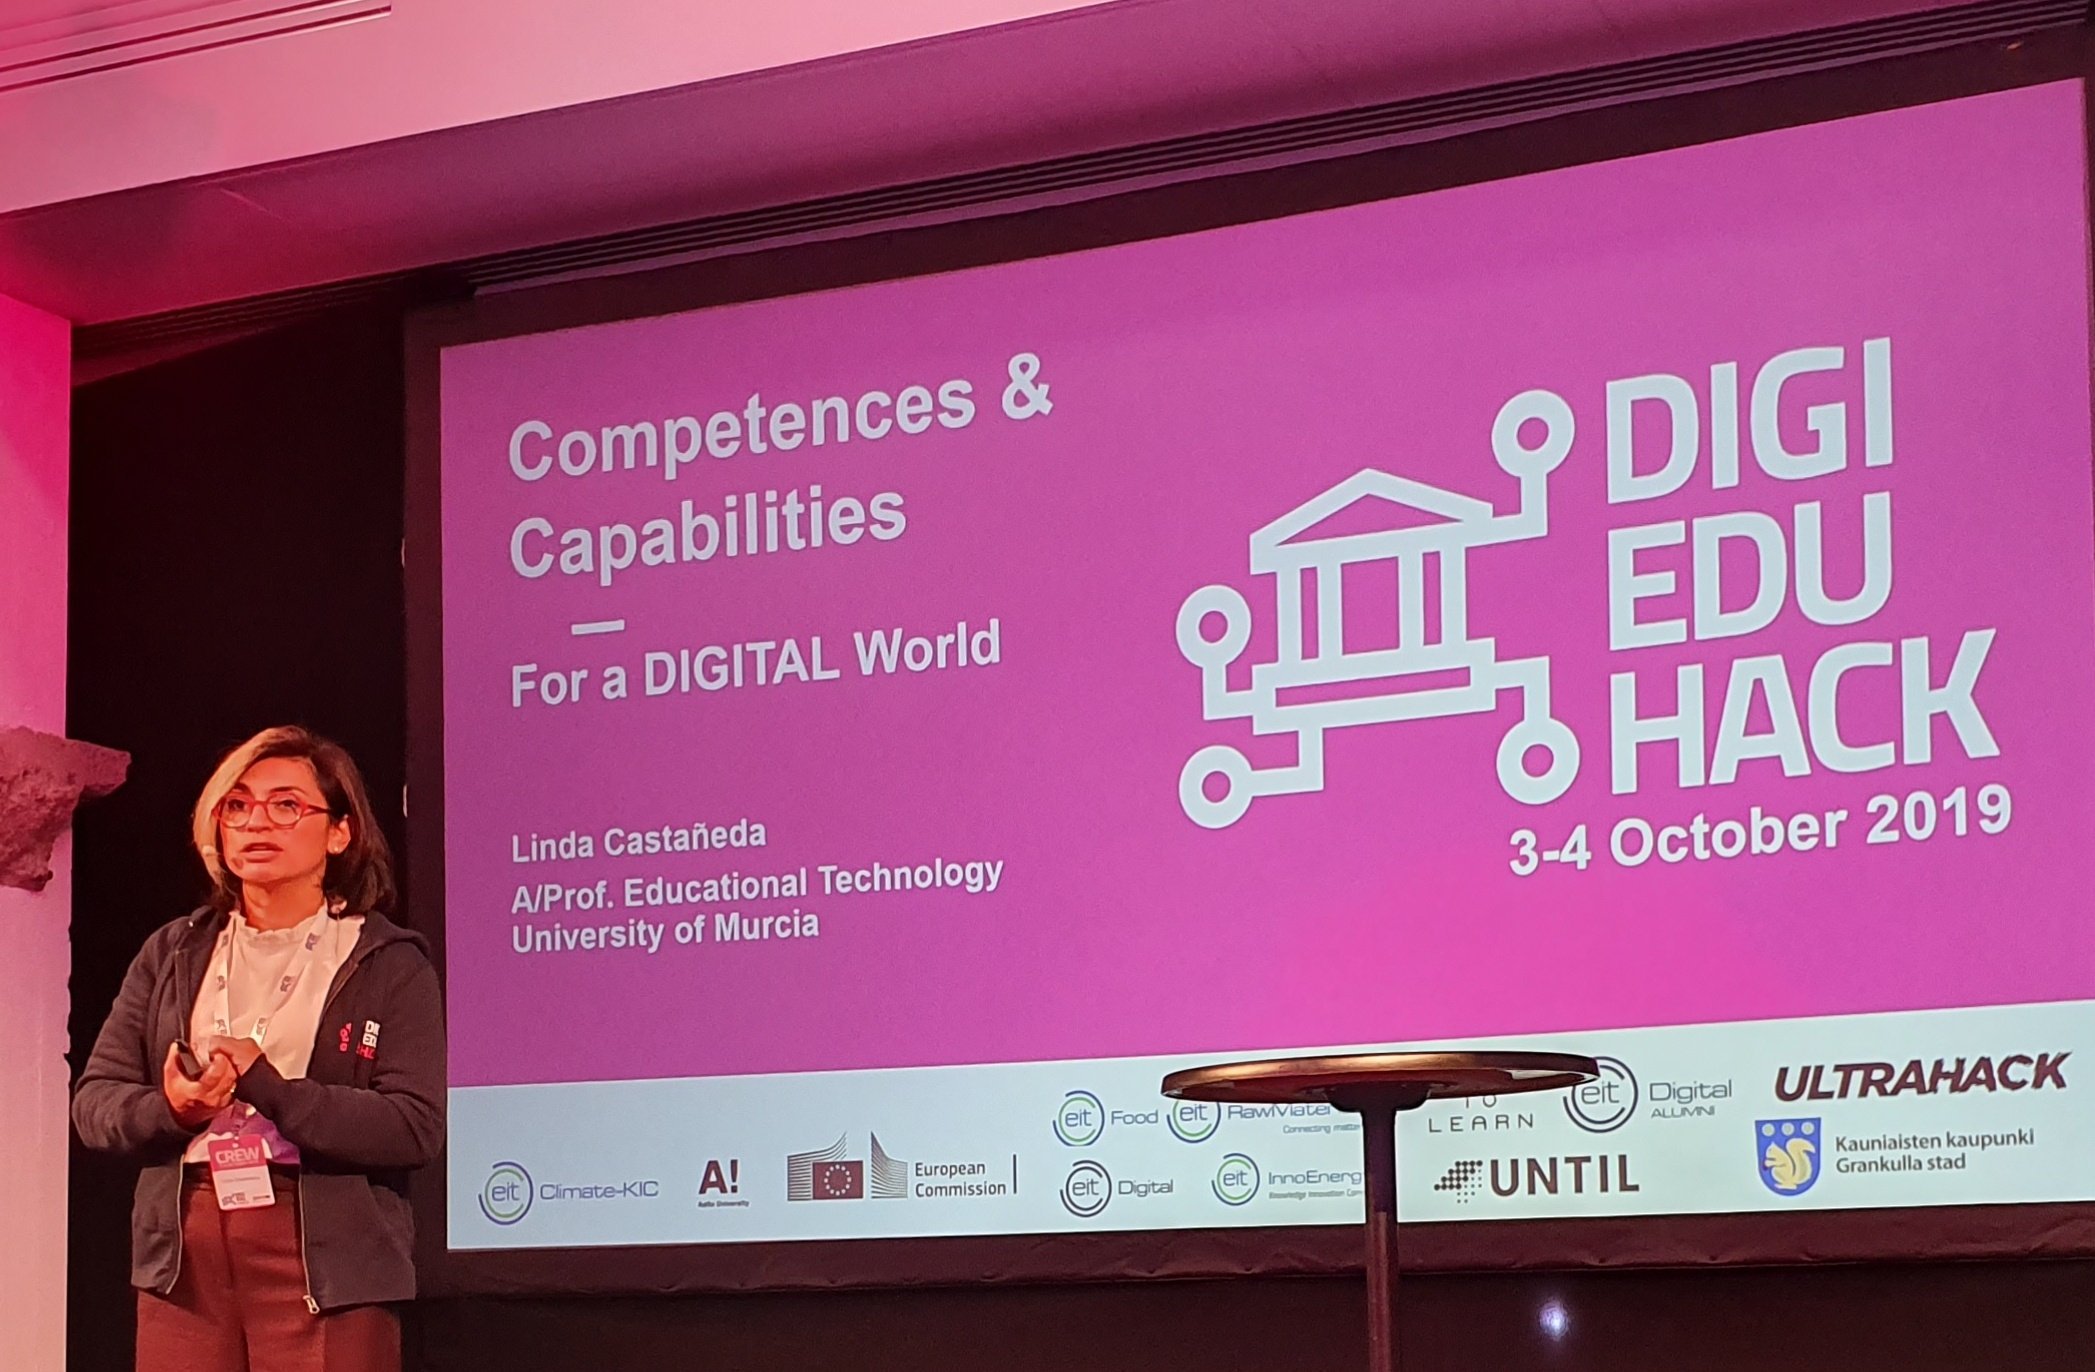 Digital Education - Linda Castañeda